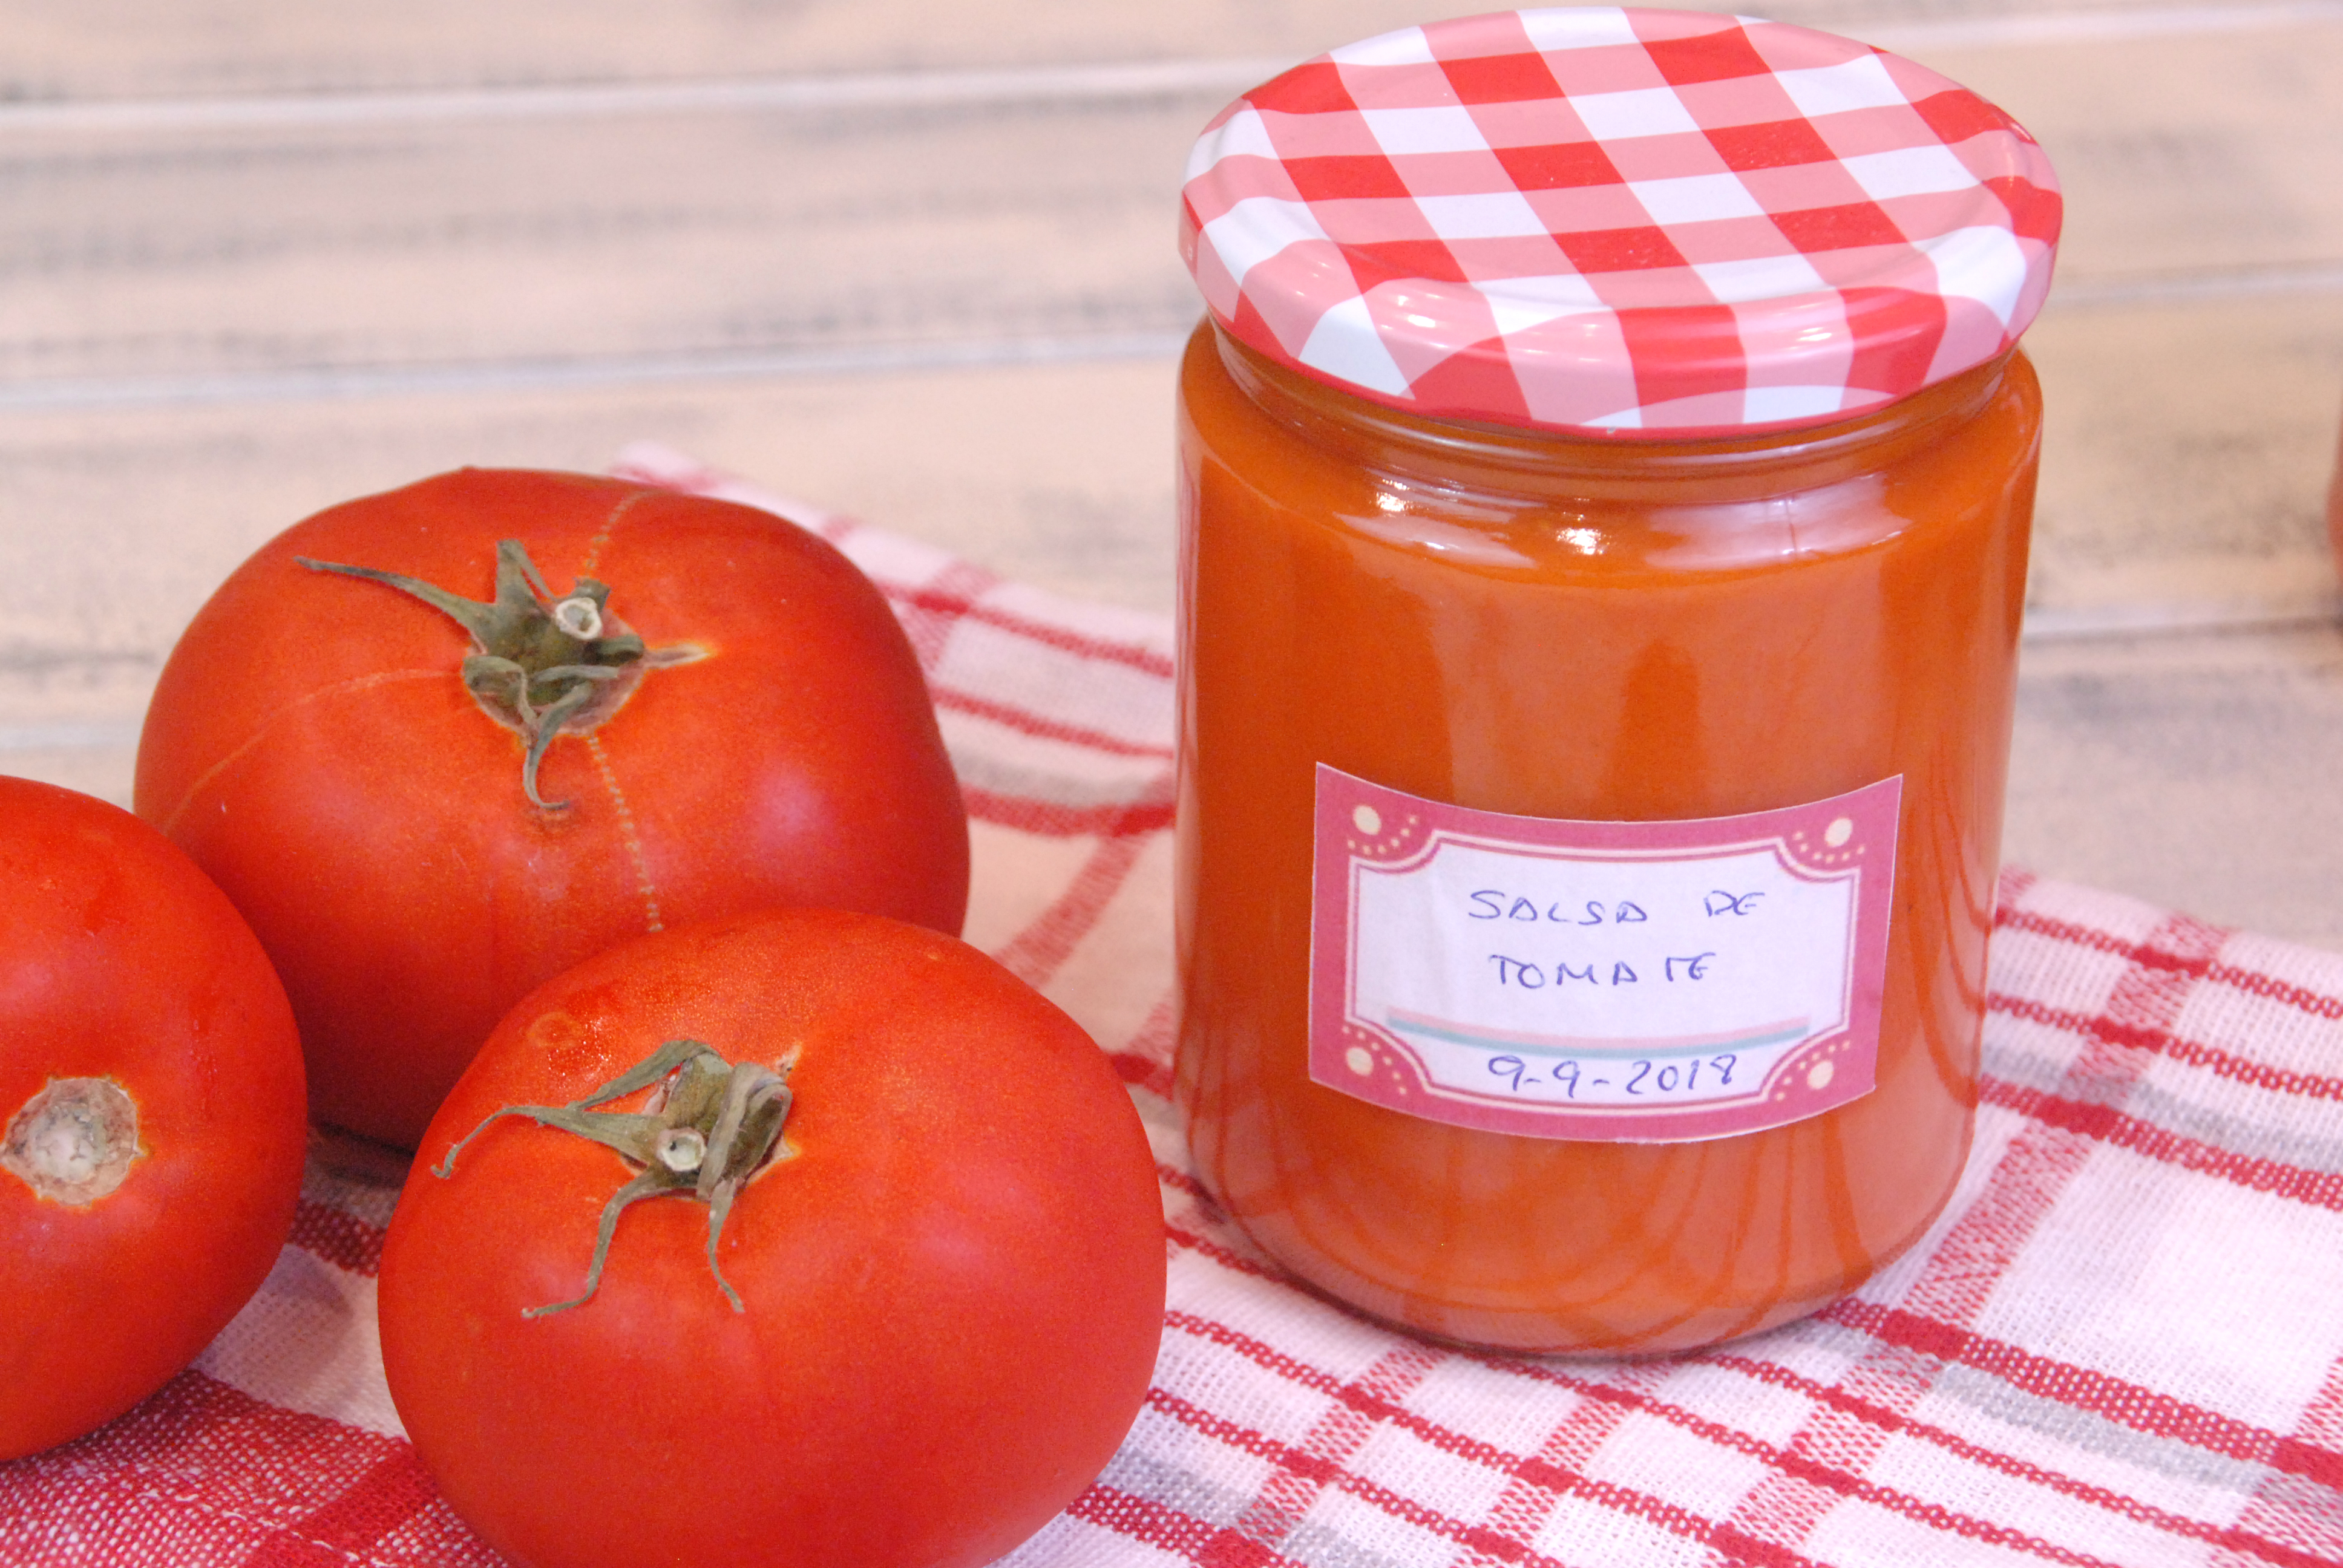 Receta de salsa de tomate casera